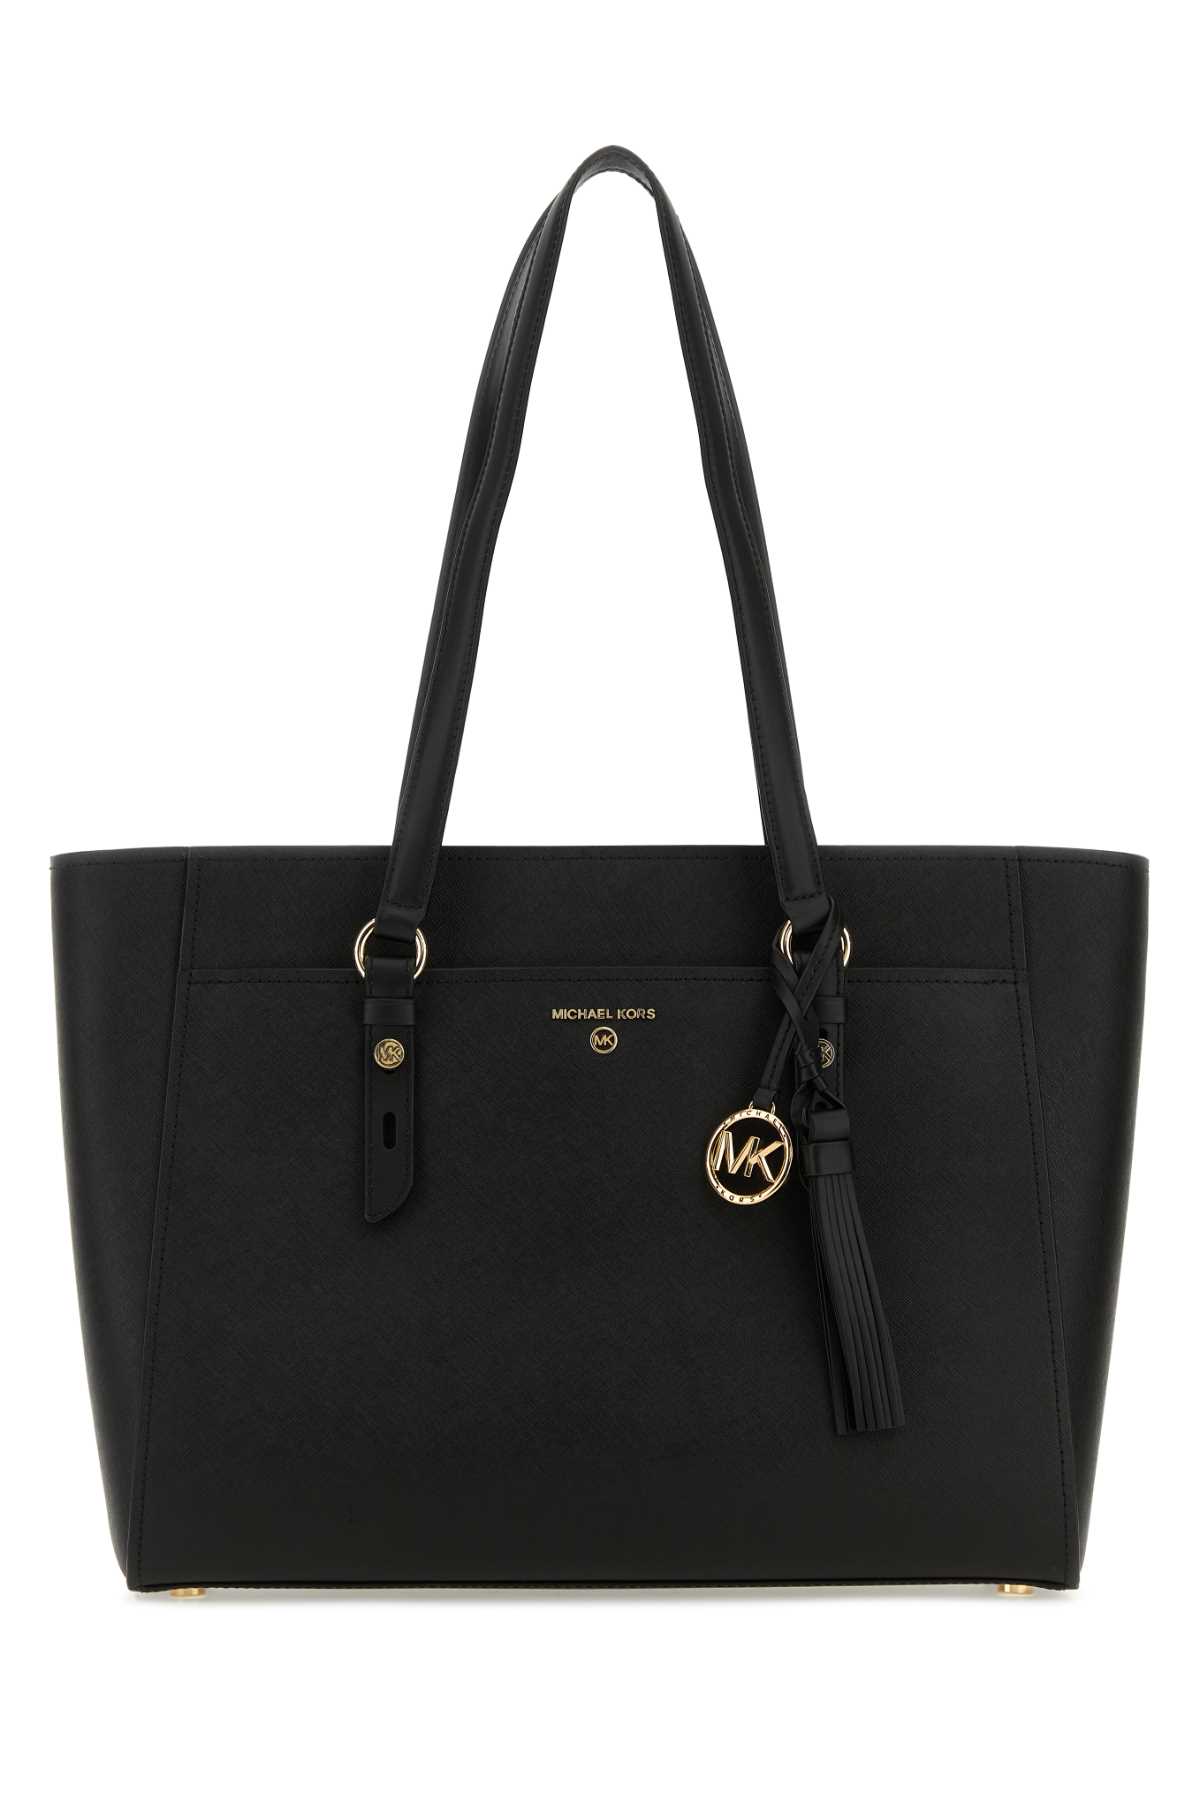 Michael Kors Black Leather Large Sullivan Shopping Bag